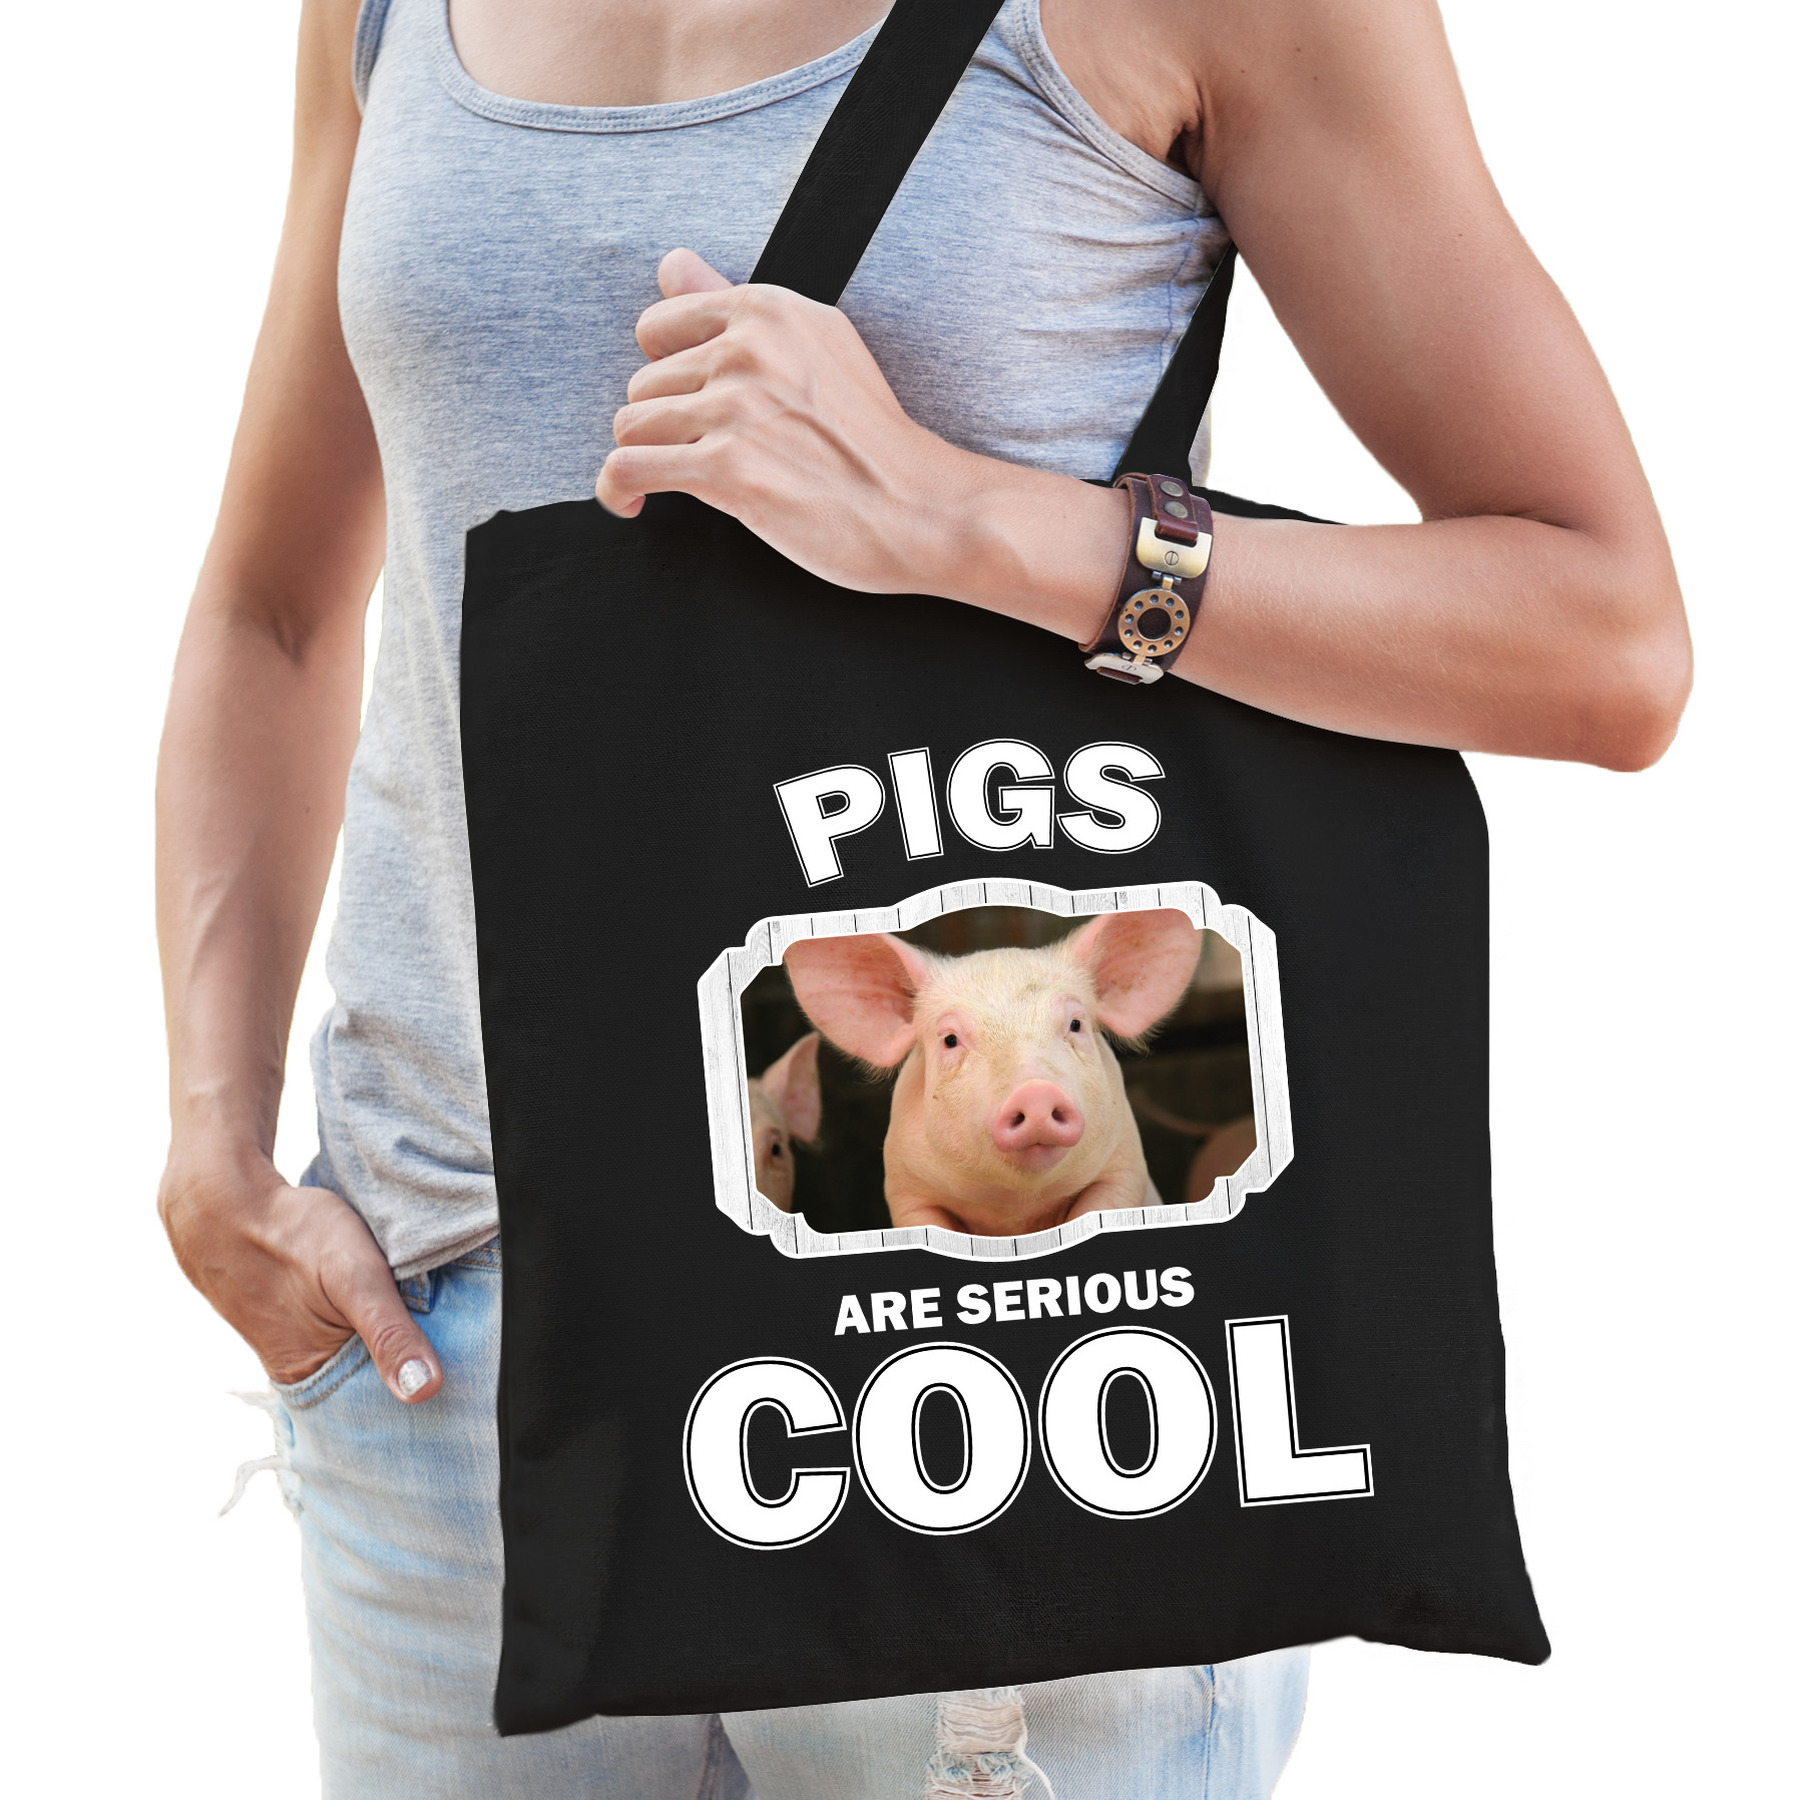 Katoenen tasje pigs are serious cool zwart - varkens/ varken cadeau tas